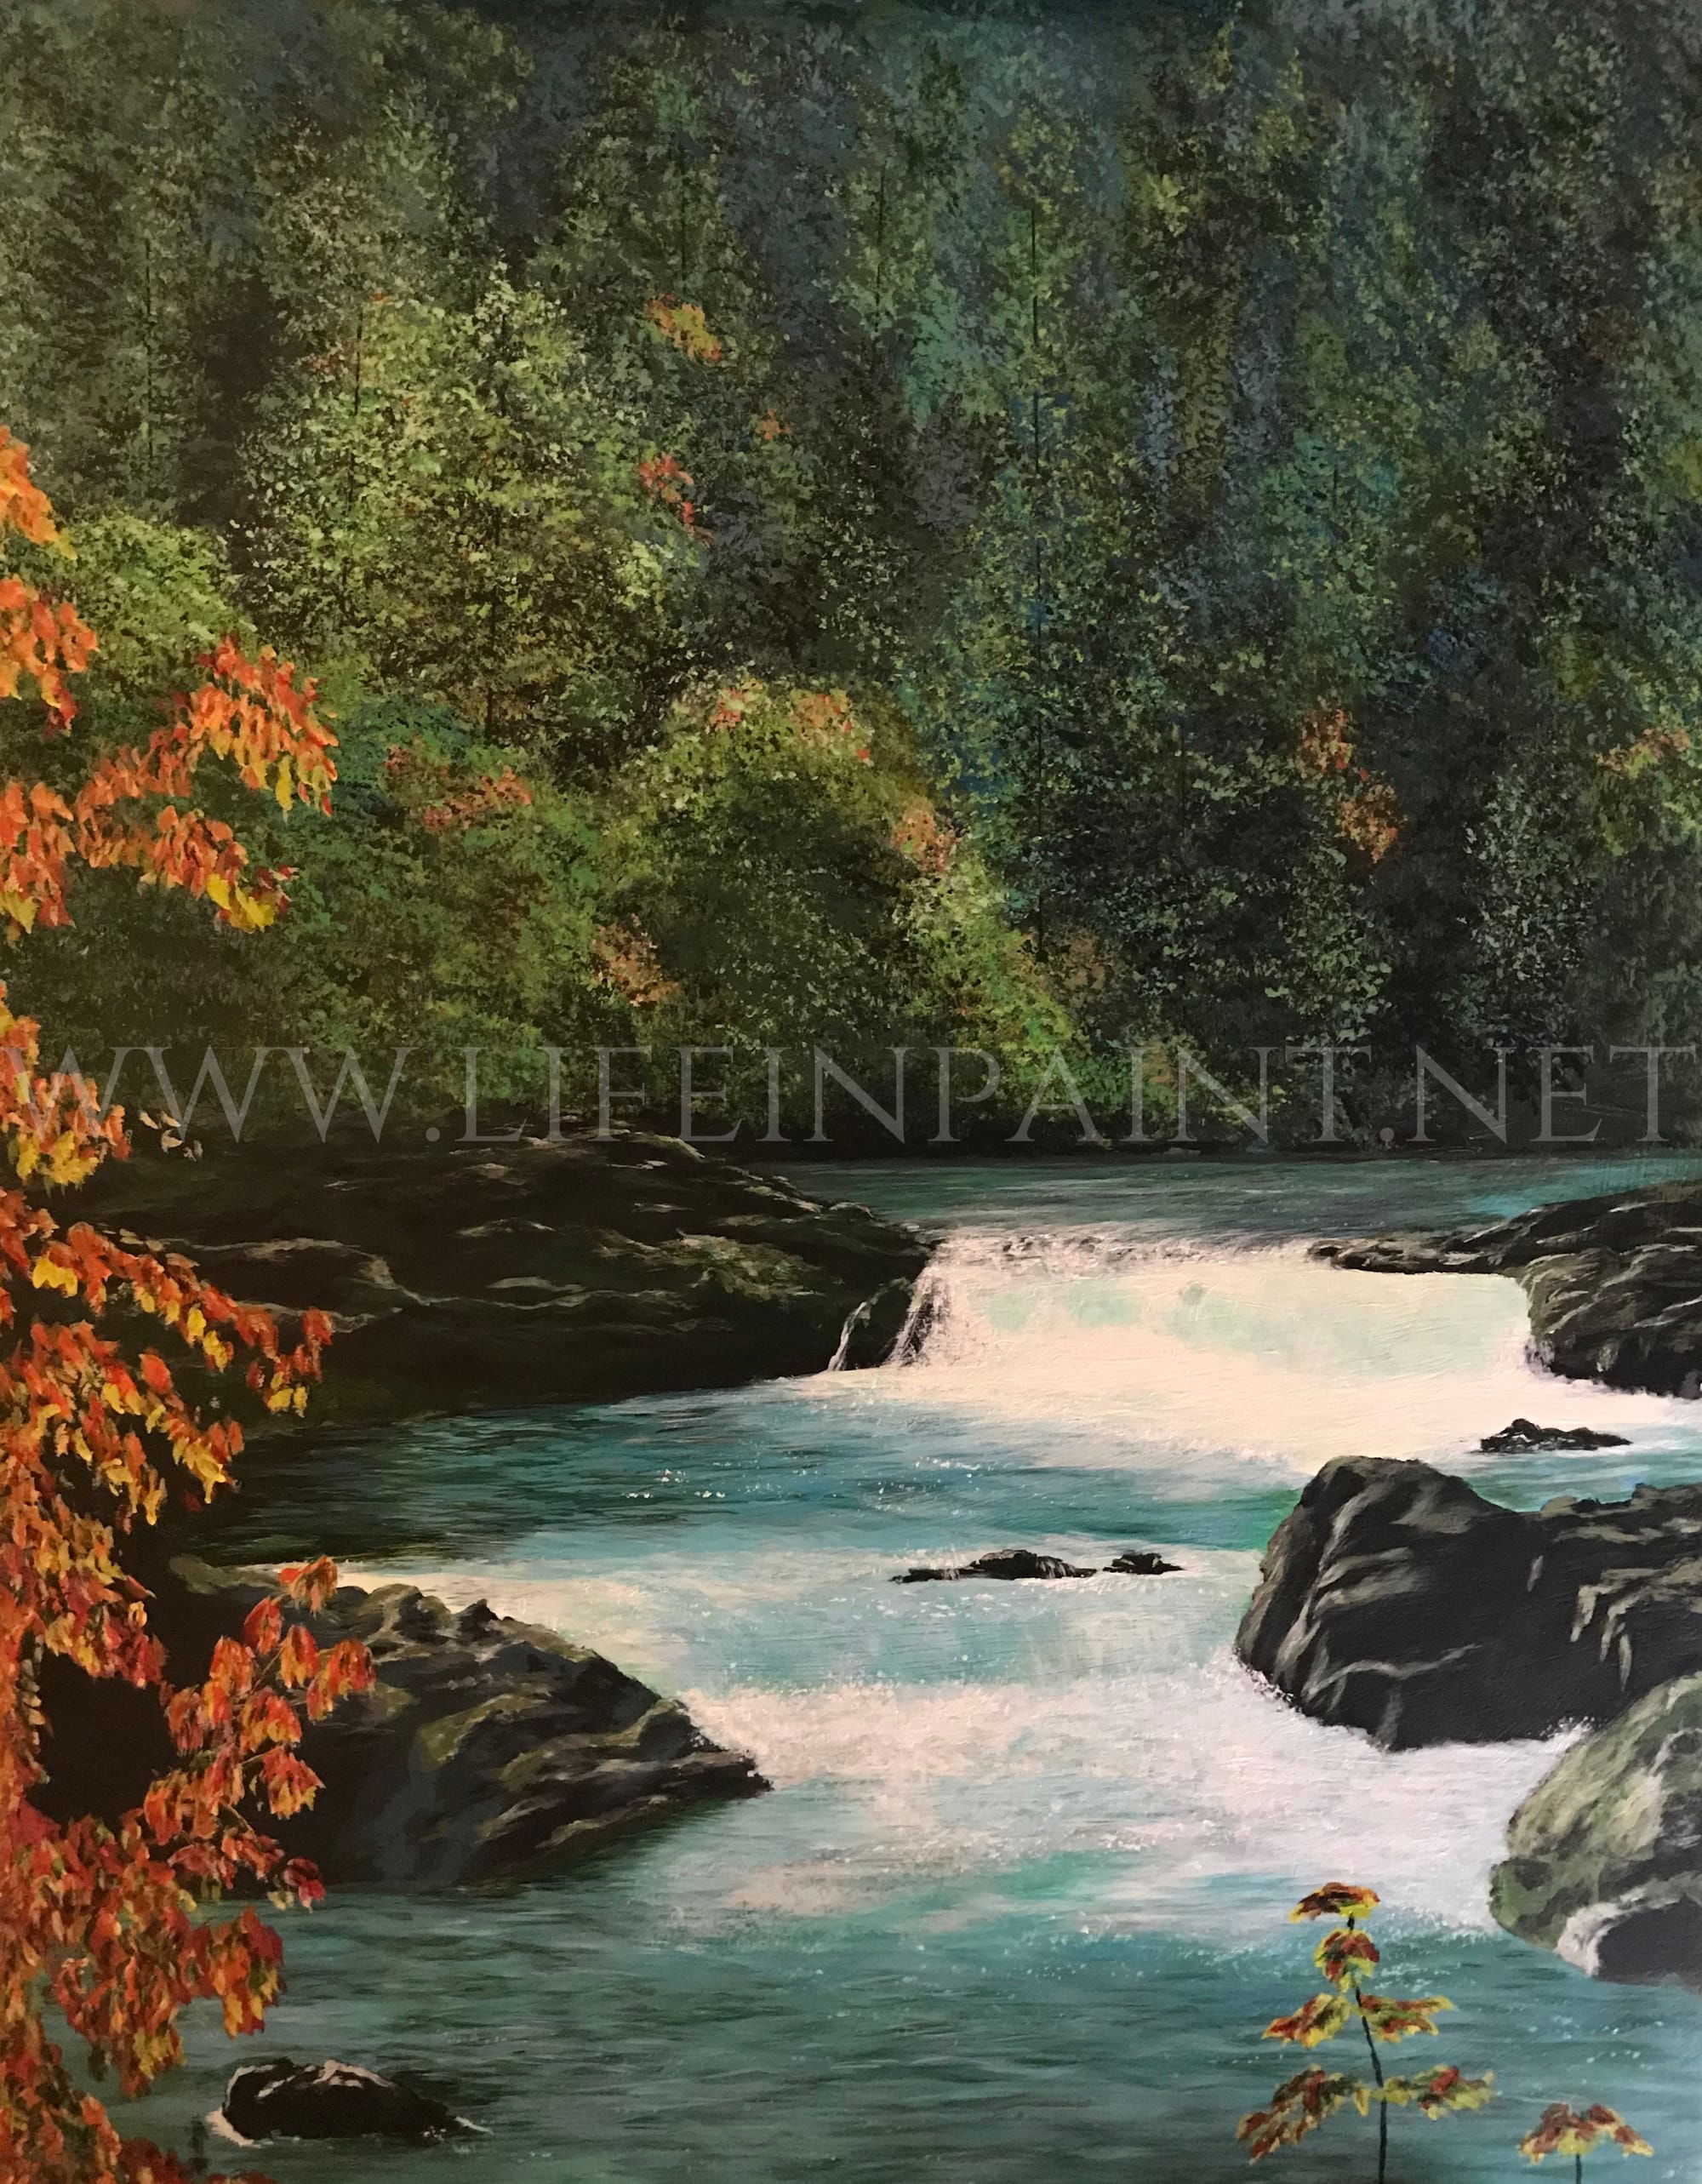 The North Umpqua River. Original Painting already sold.